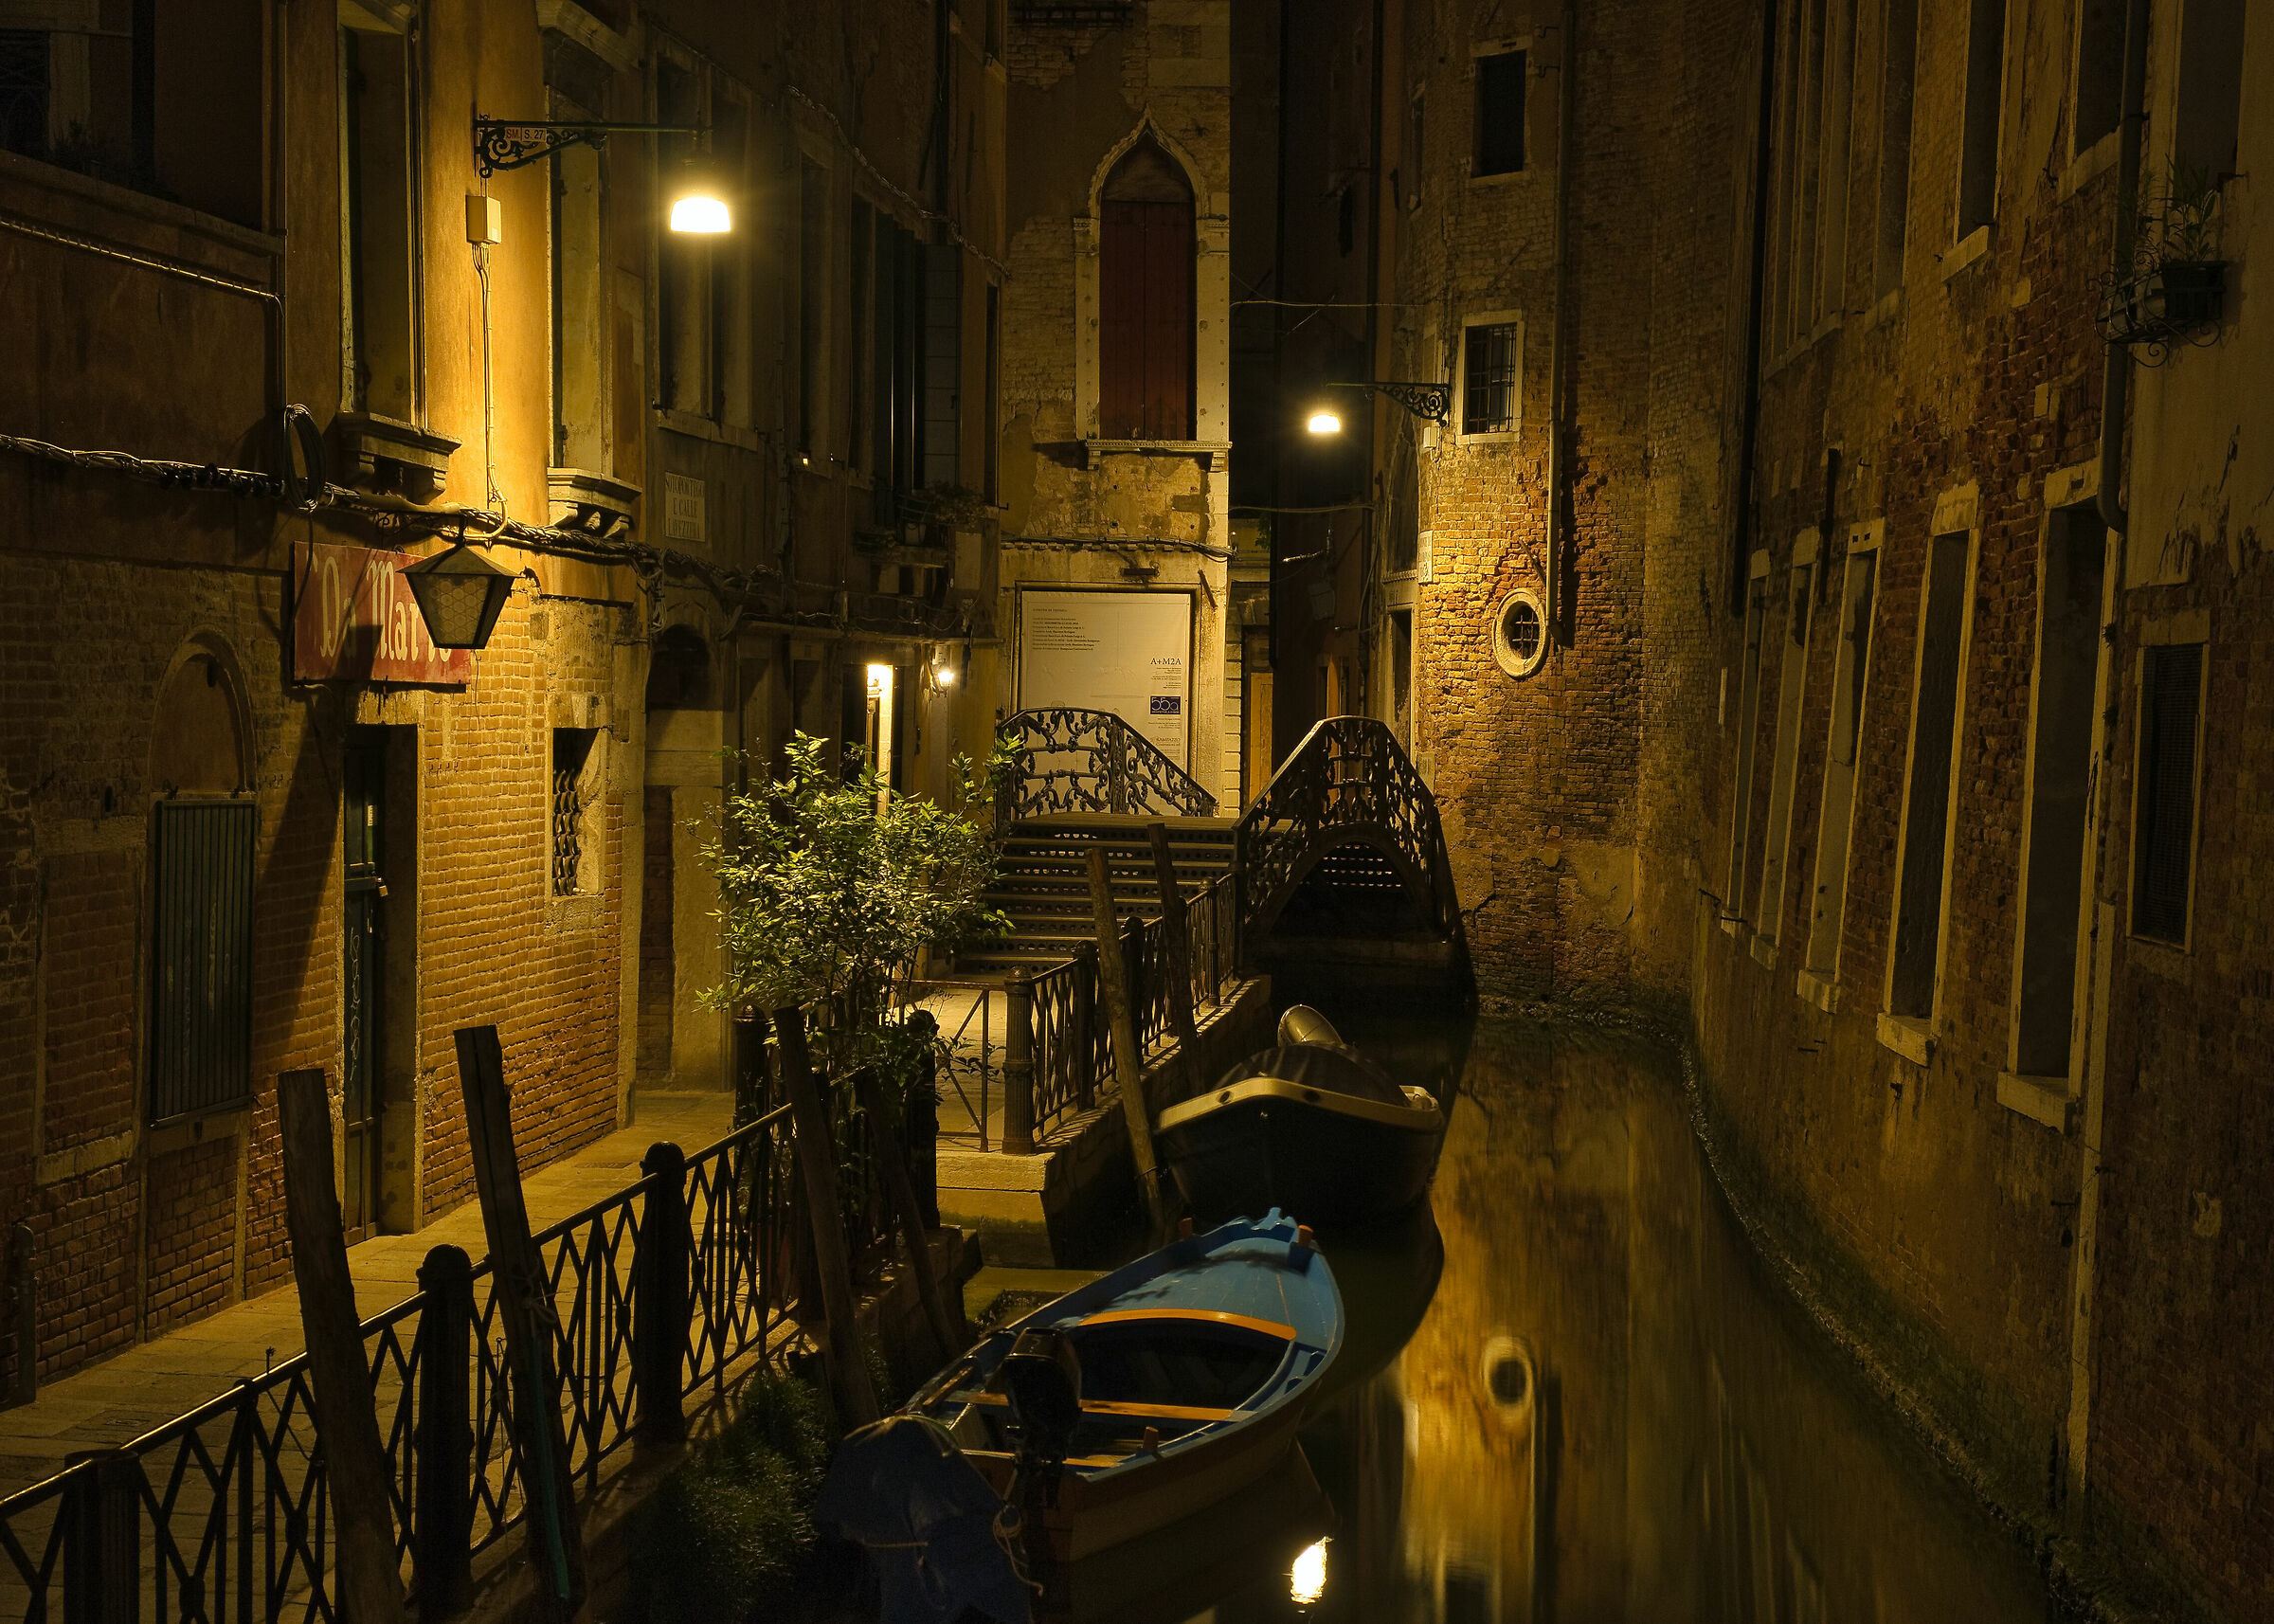 Venice by night...